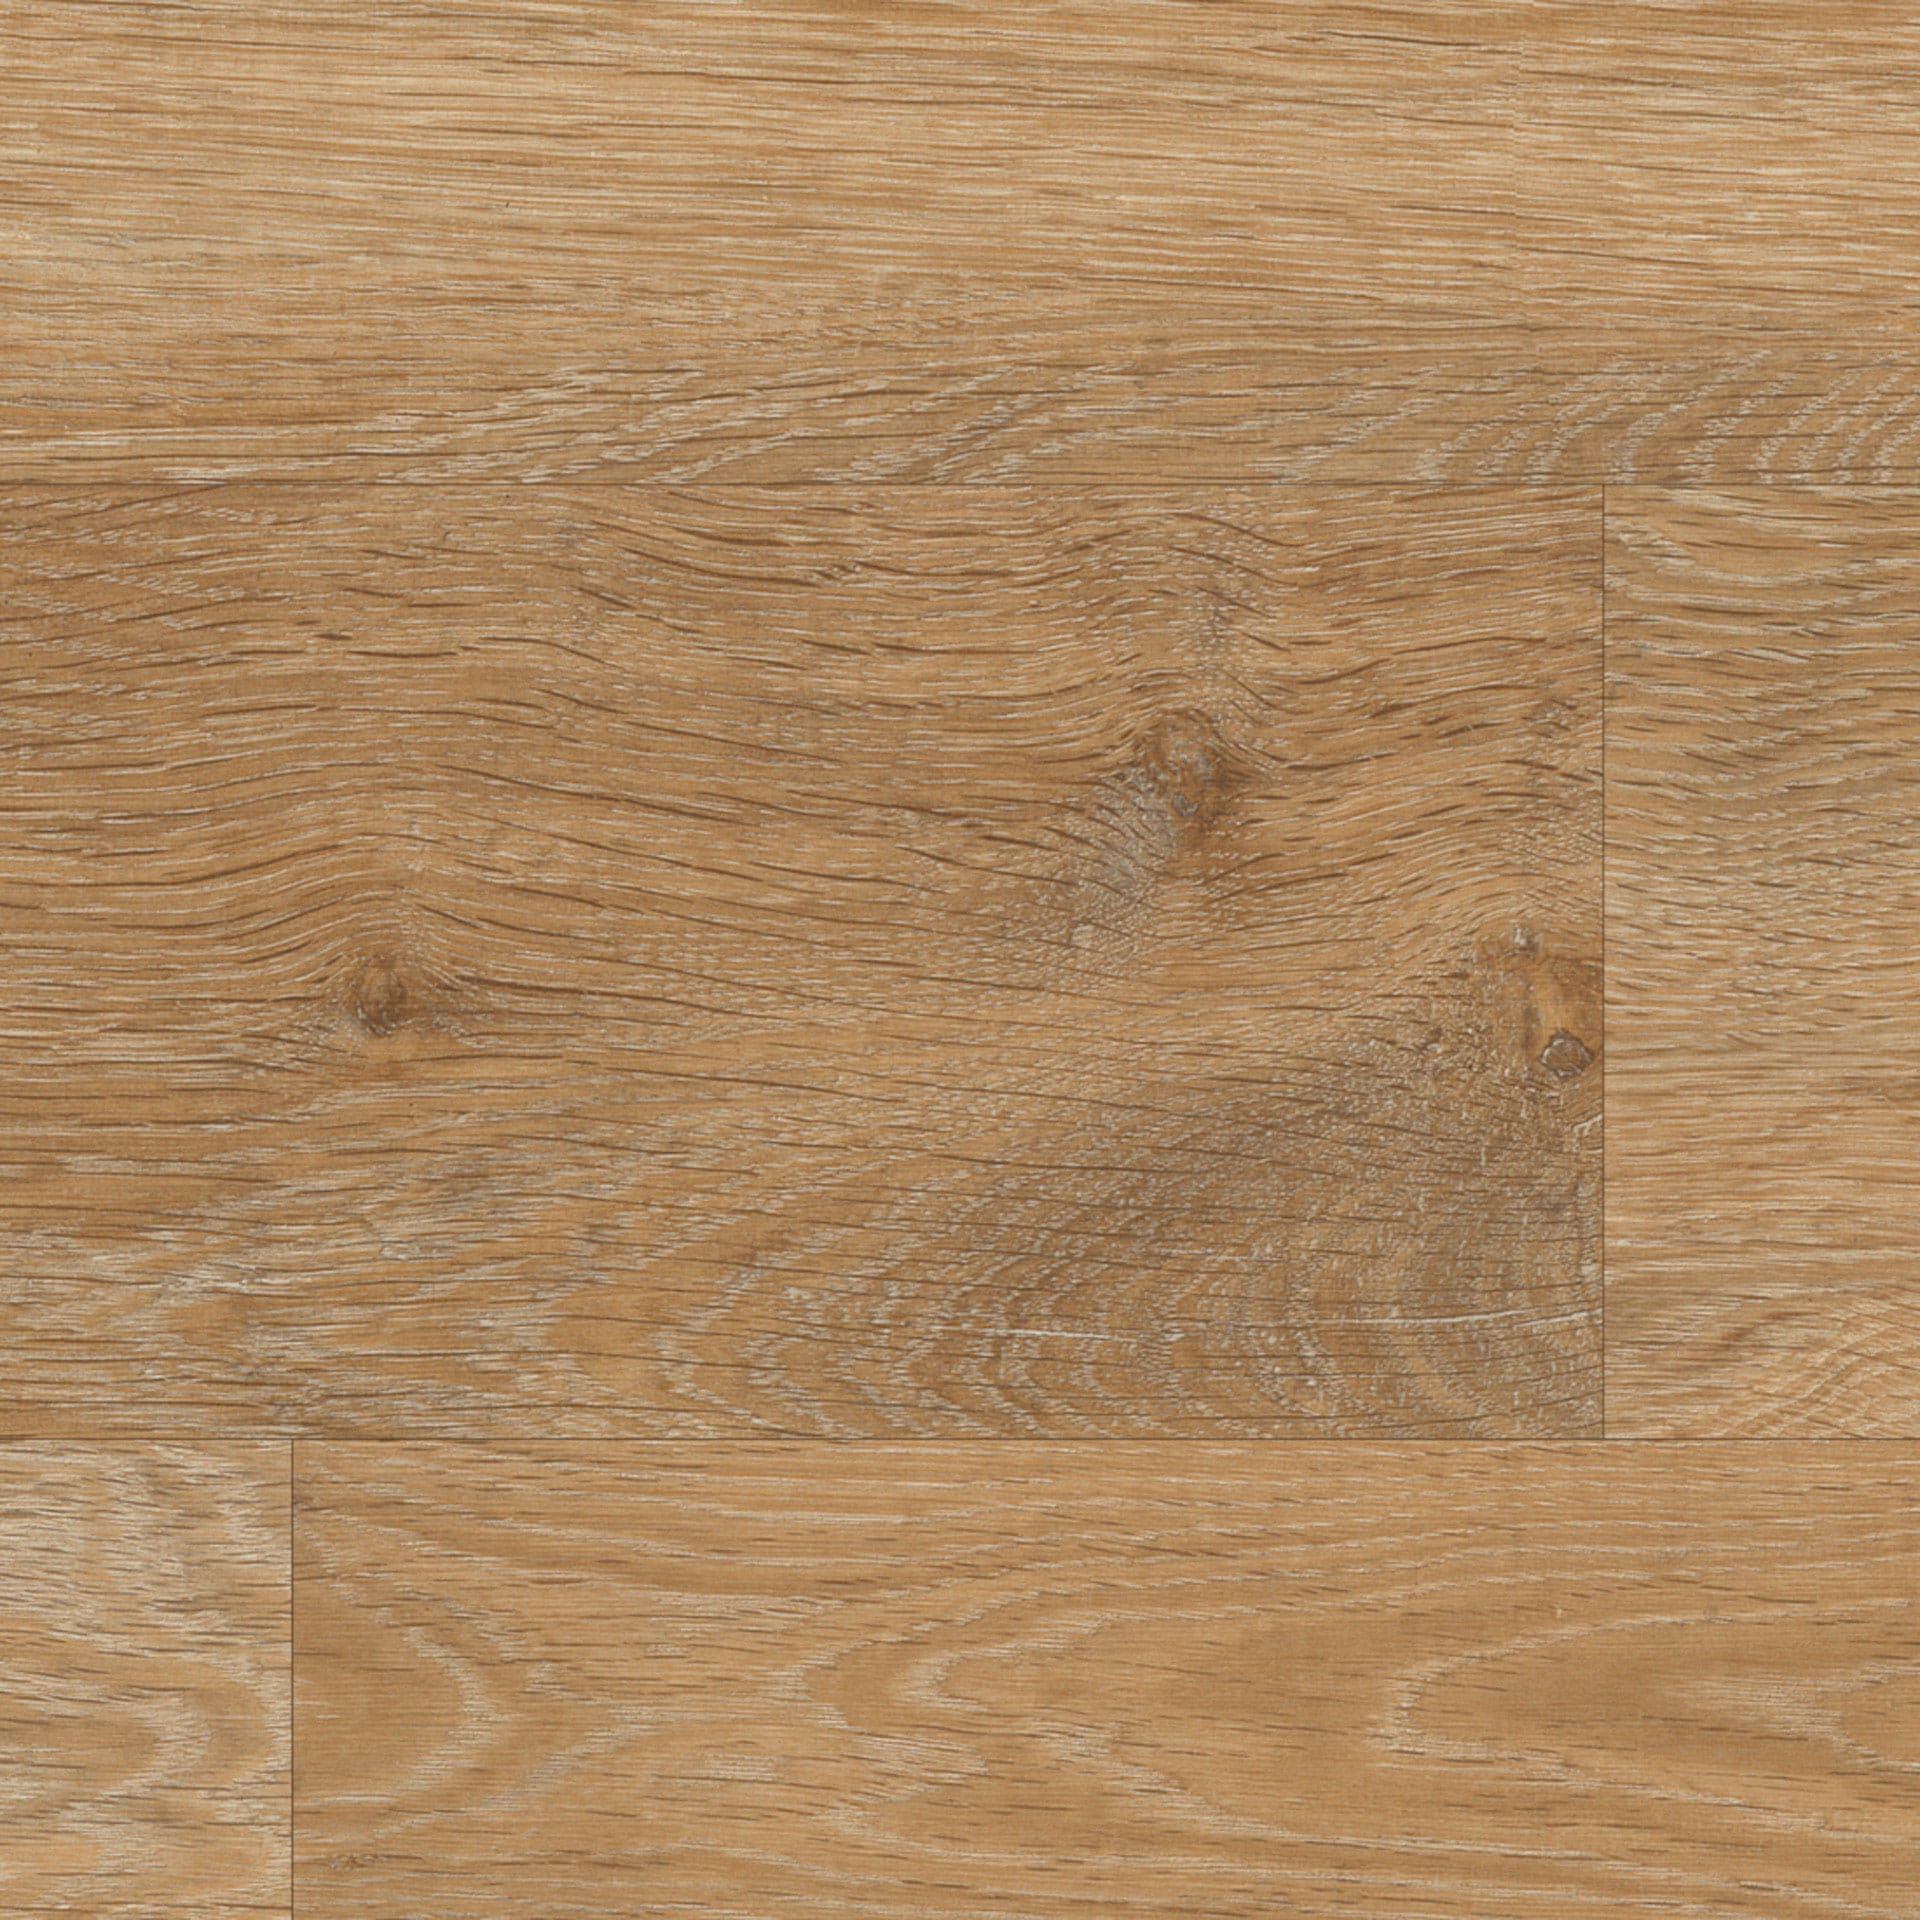 View of KP94 Pale Limed Oak luxury vinyl tile by Karndean